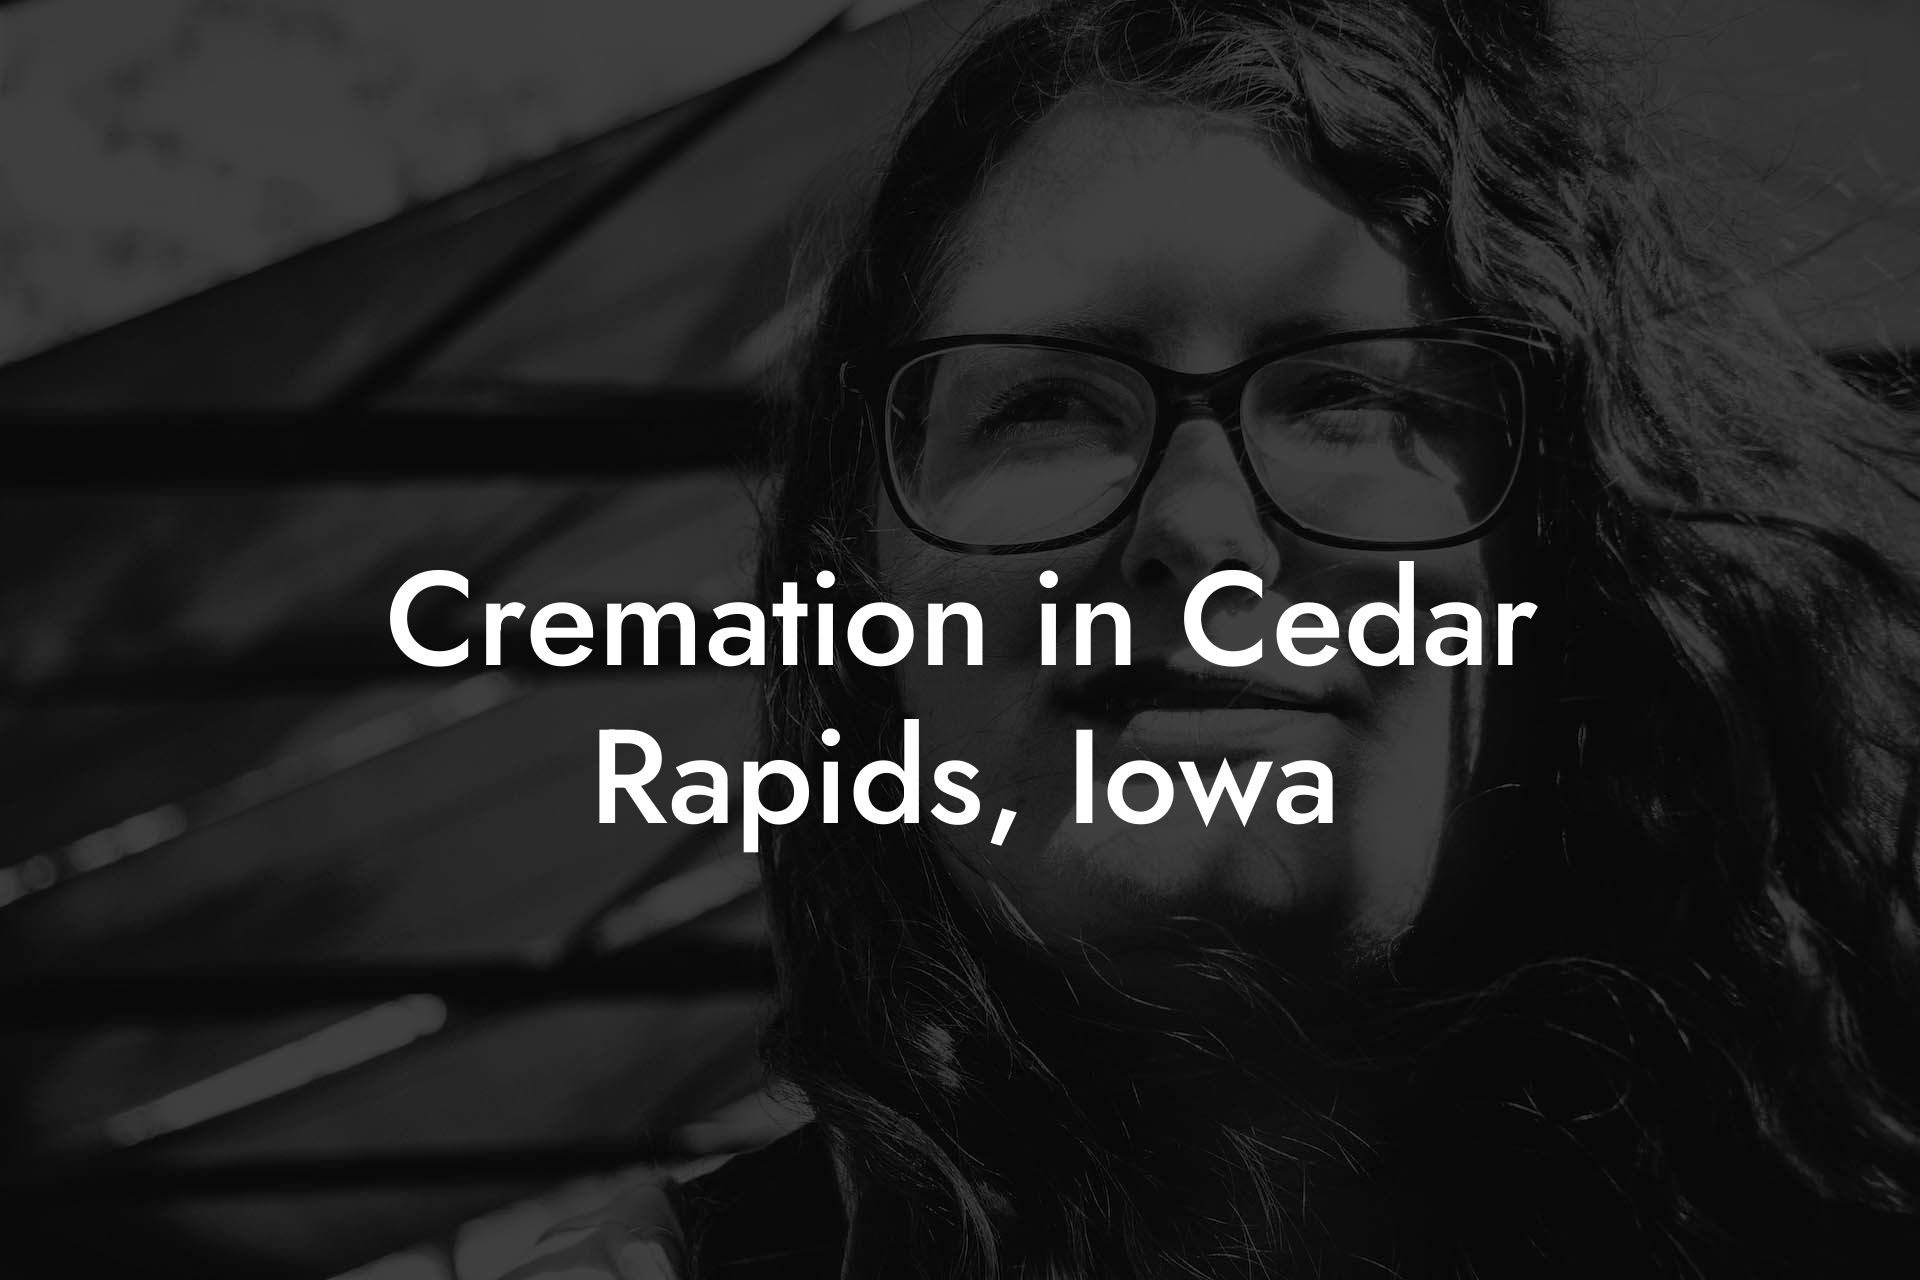 Cremation in Cedar Rapids, Iowa